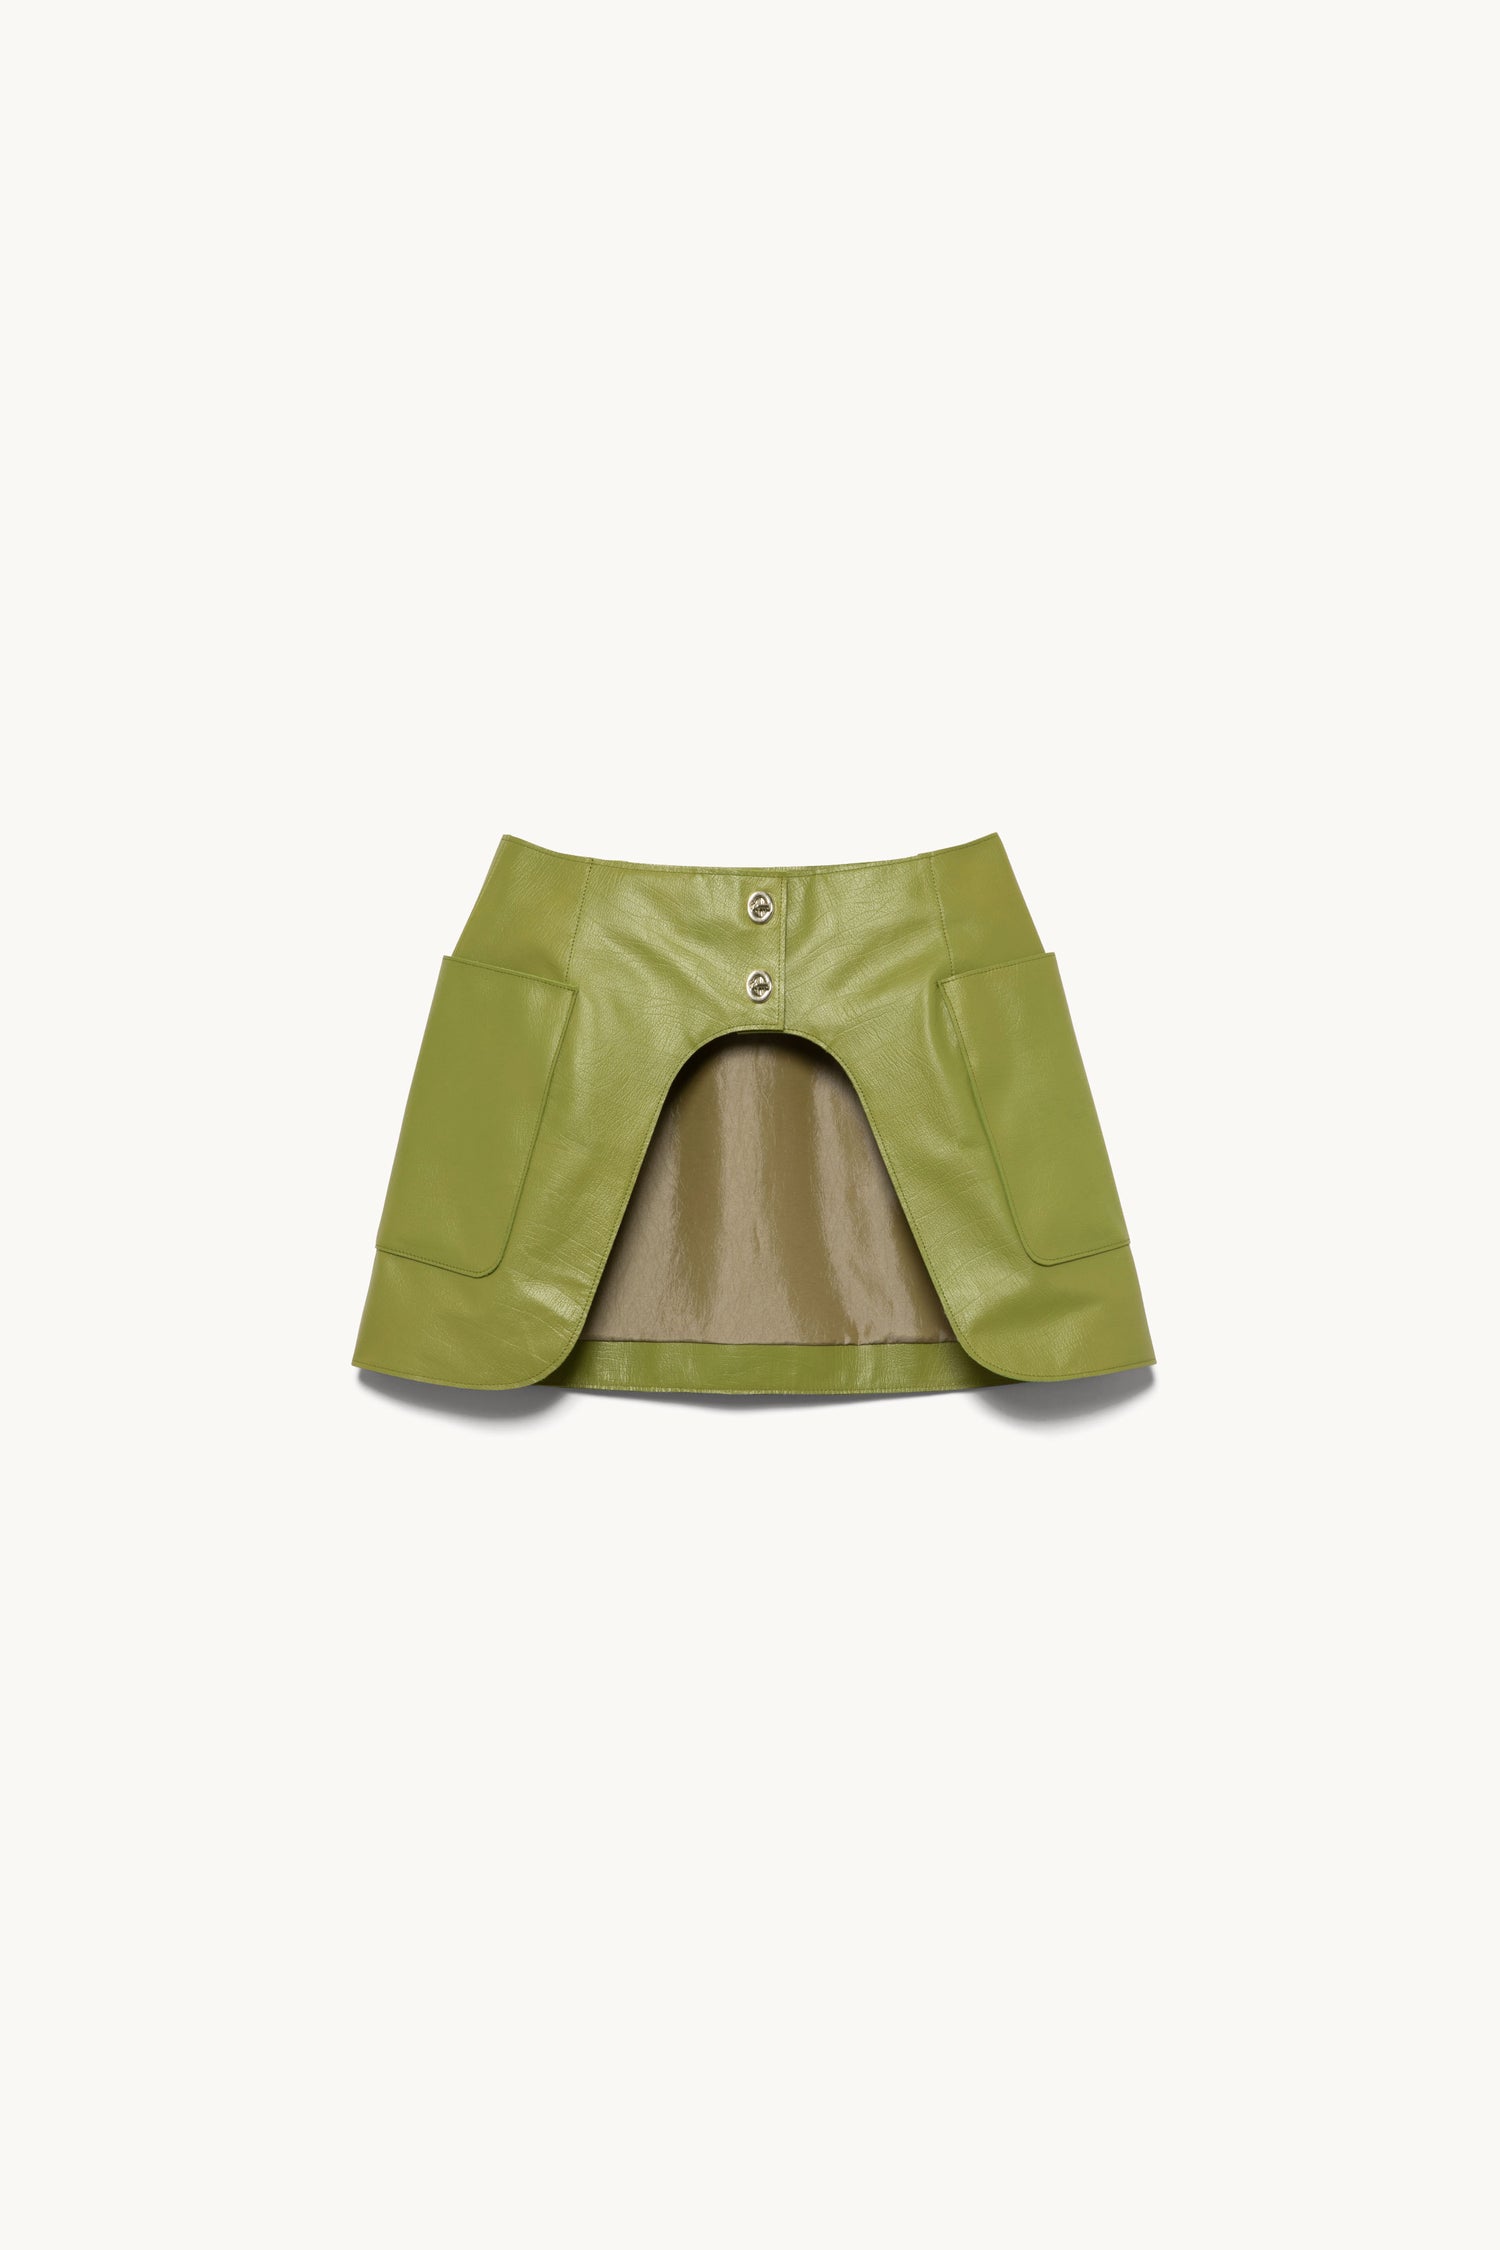 Leather Pocket Skirt